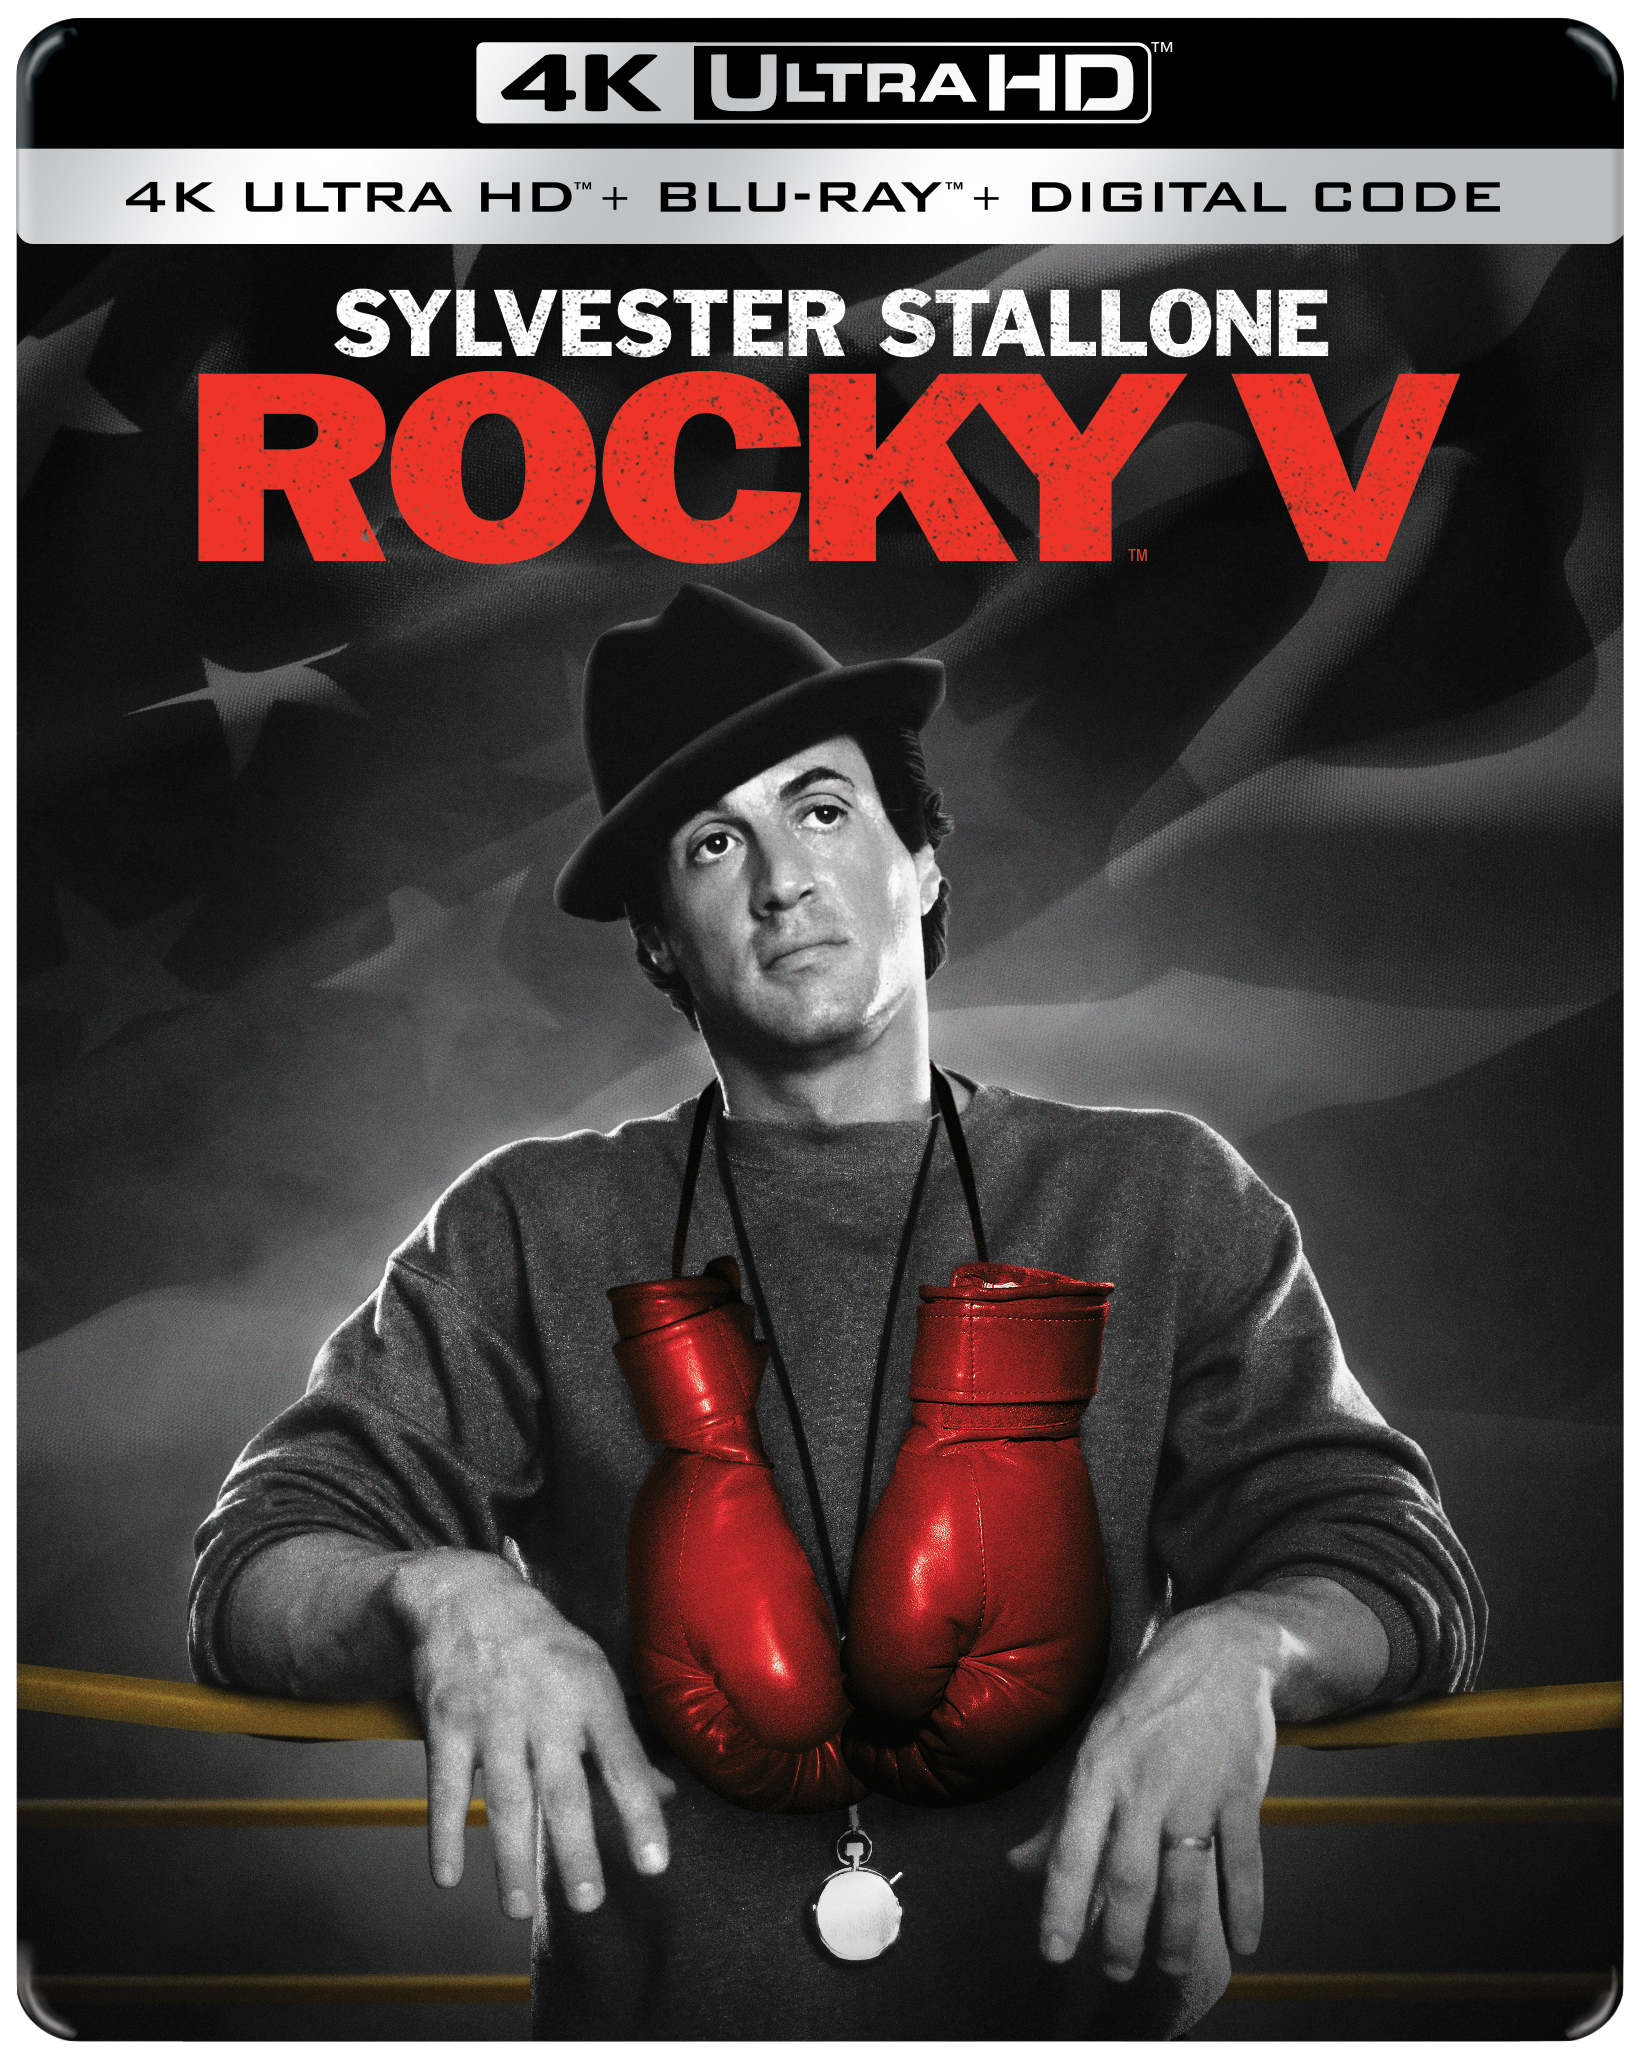 Pre-order Rocky 5 Limited Edition 4K Steelbook + Blu-ray UHD | GRUV